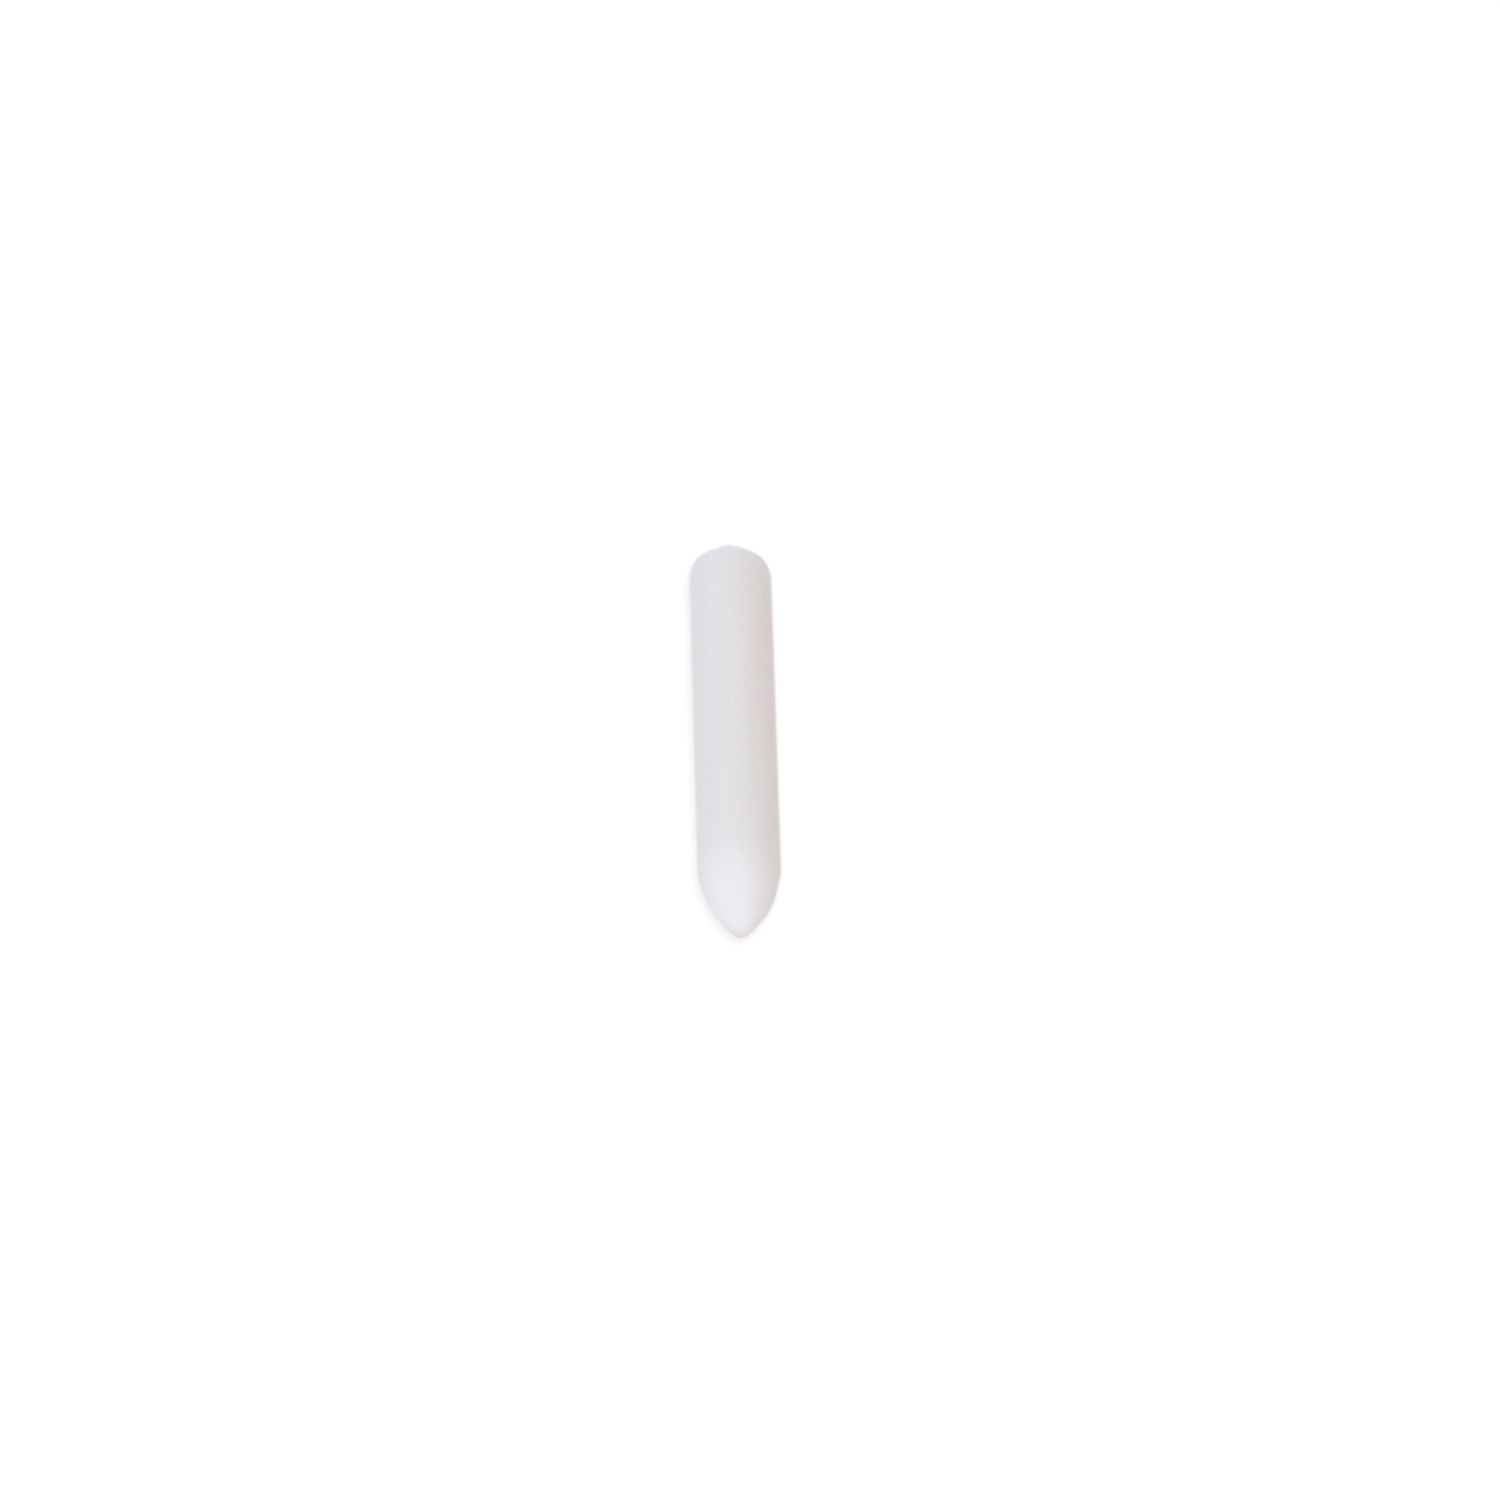 Feltro bianco, rotondo Ø 3,5 mm (25 pz.)